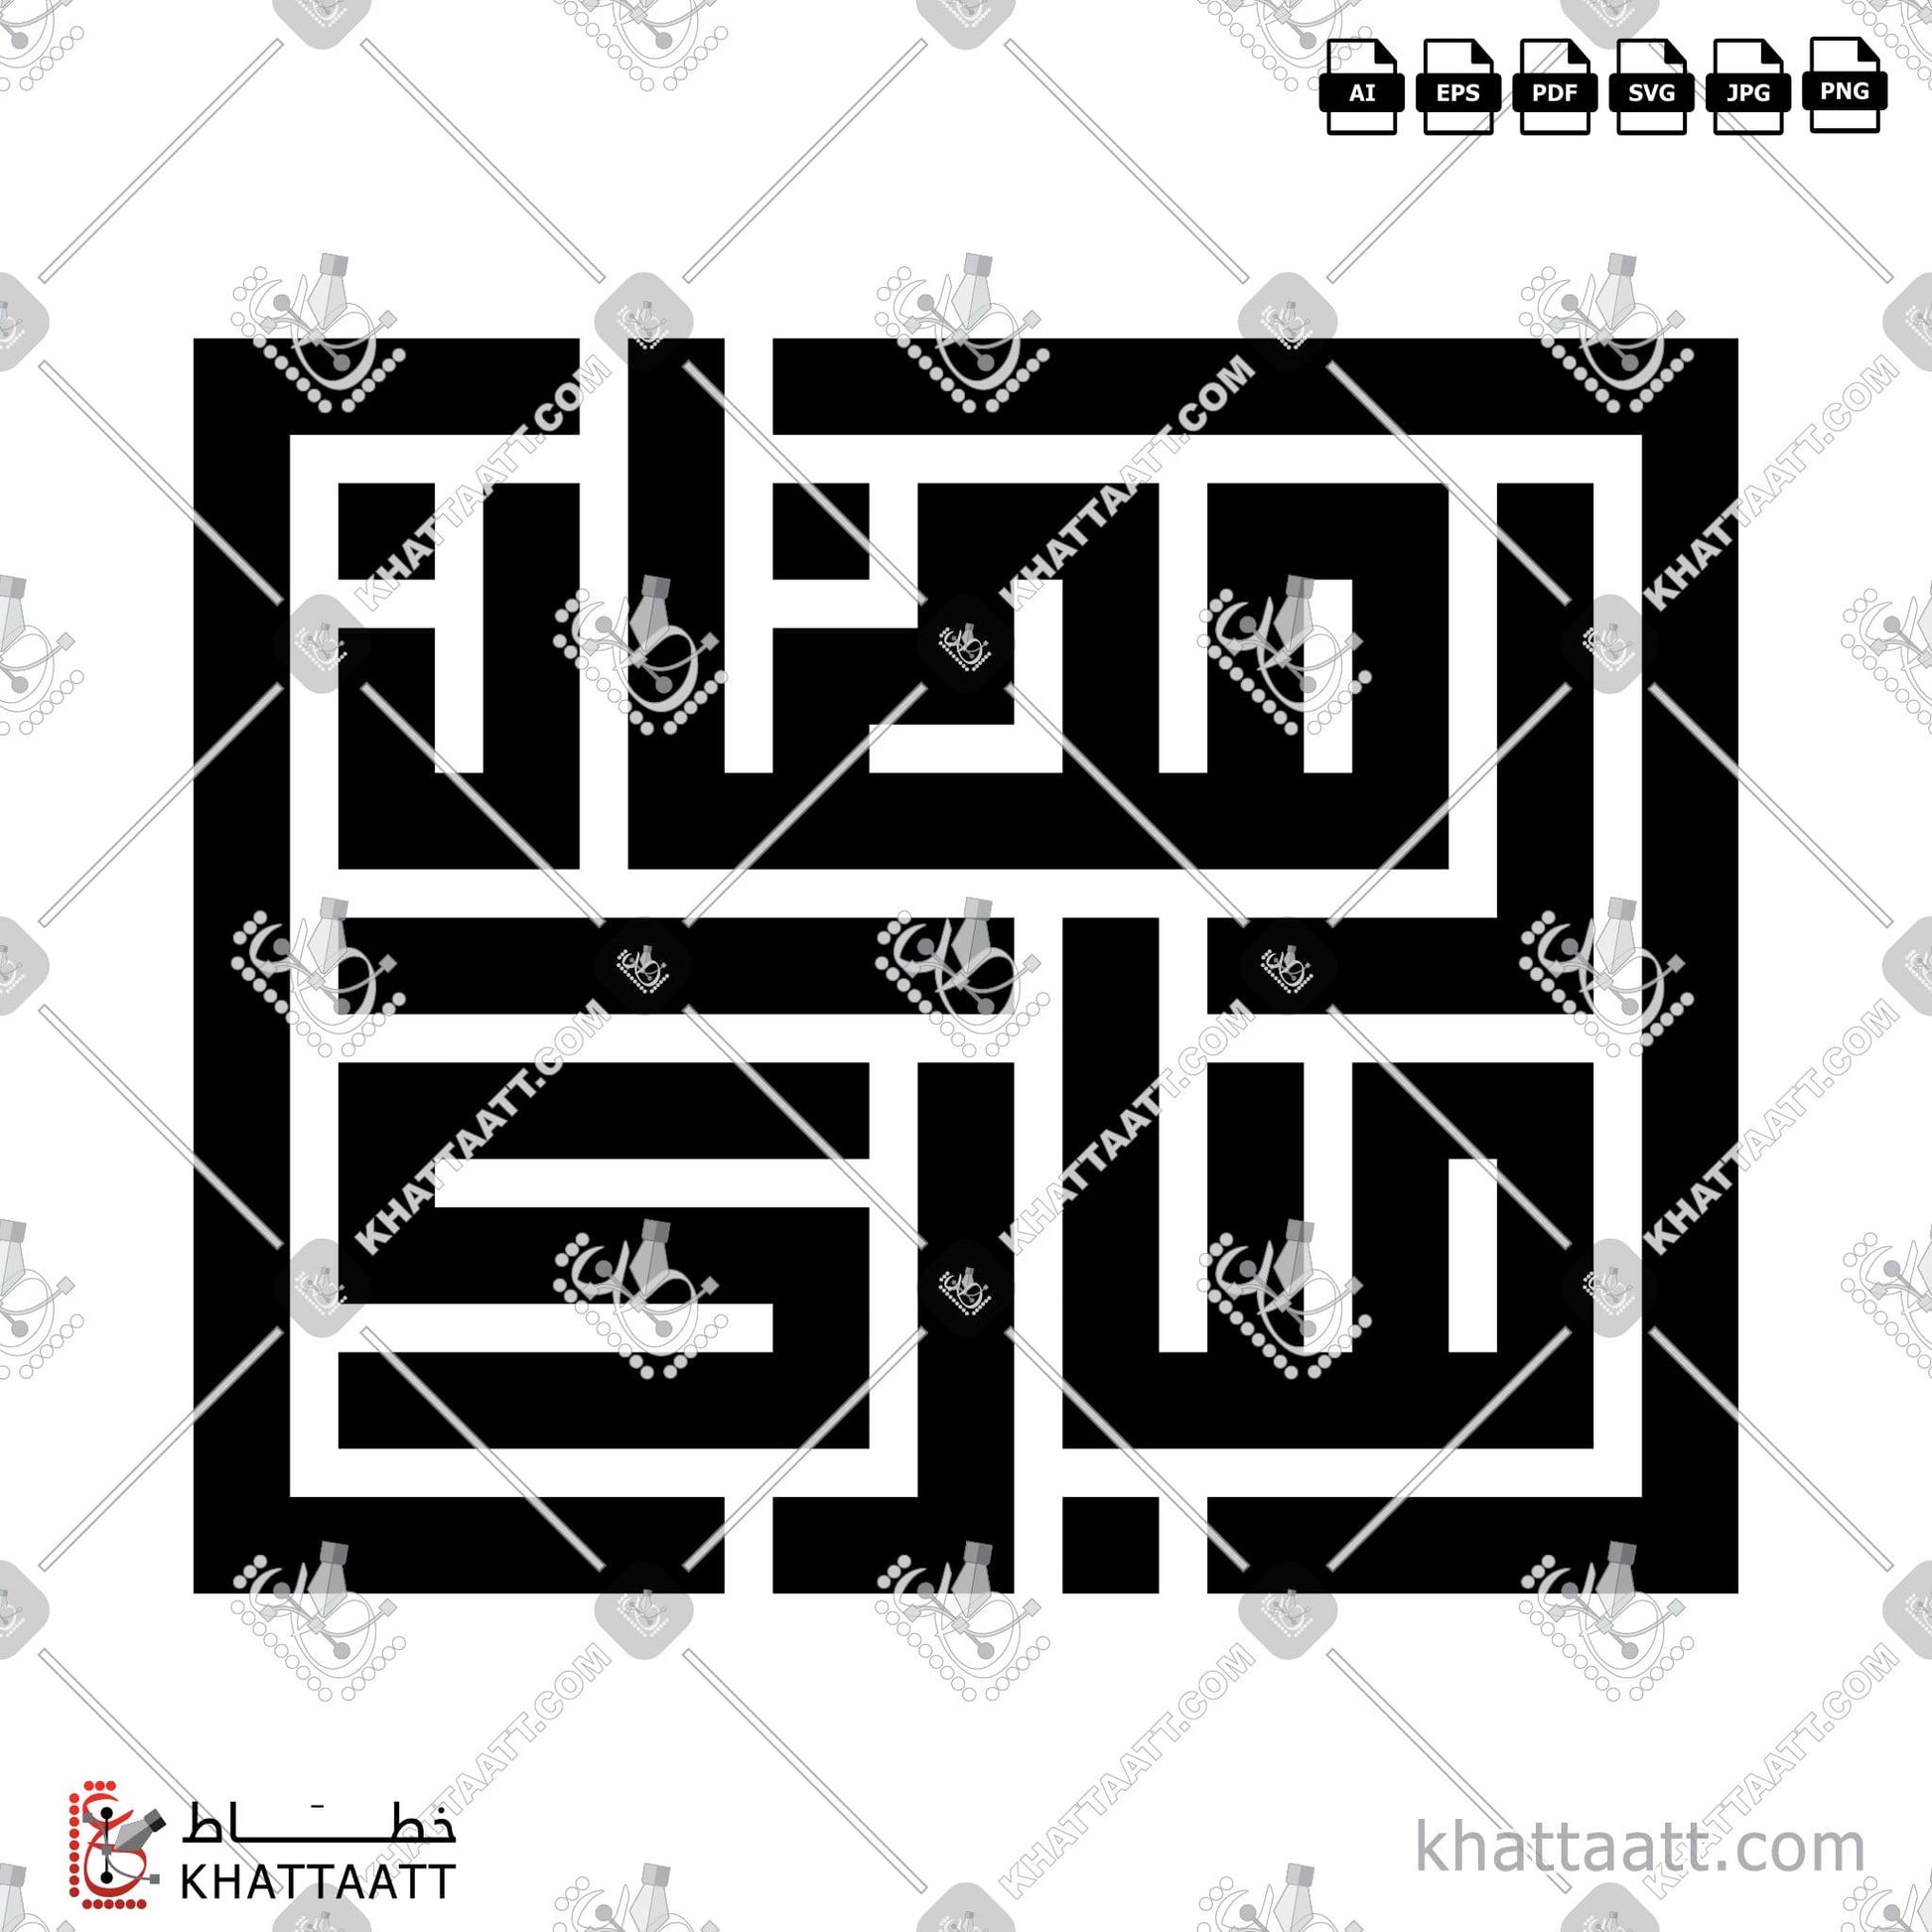 Download Arabic Calligraphy of Ramadan Mubarak - رمضان مبارك in Kufi - الخط الكوفي in vector and .png